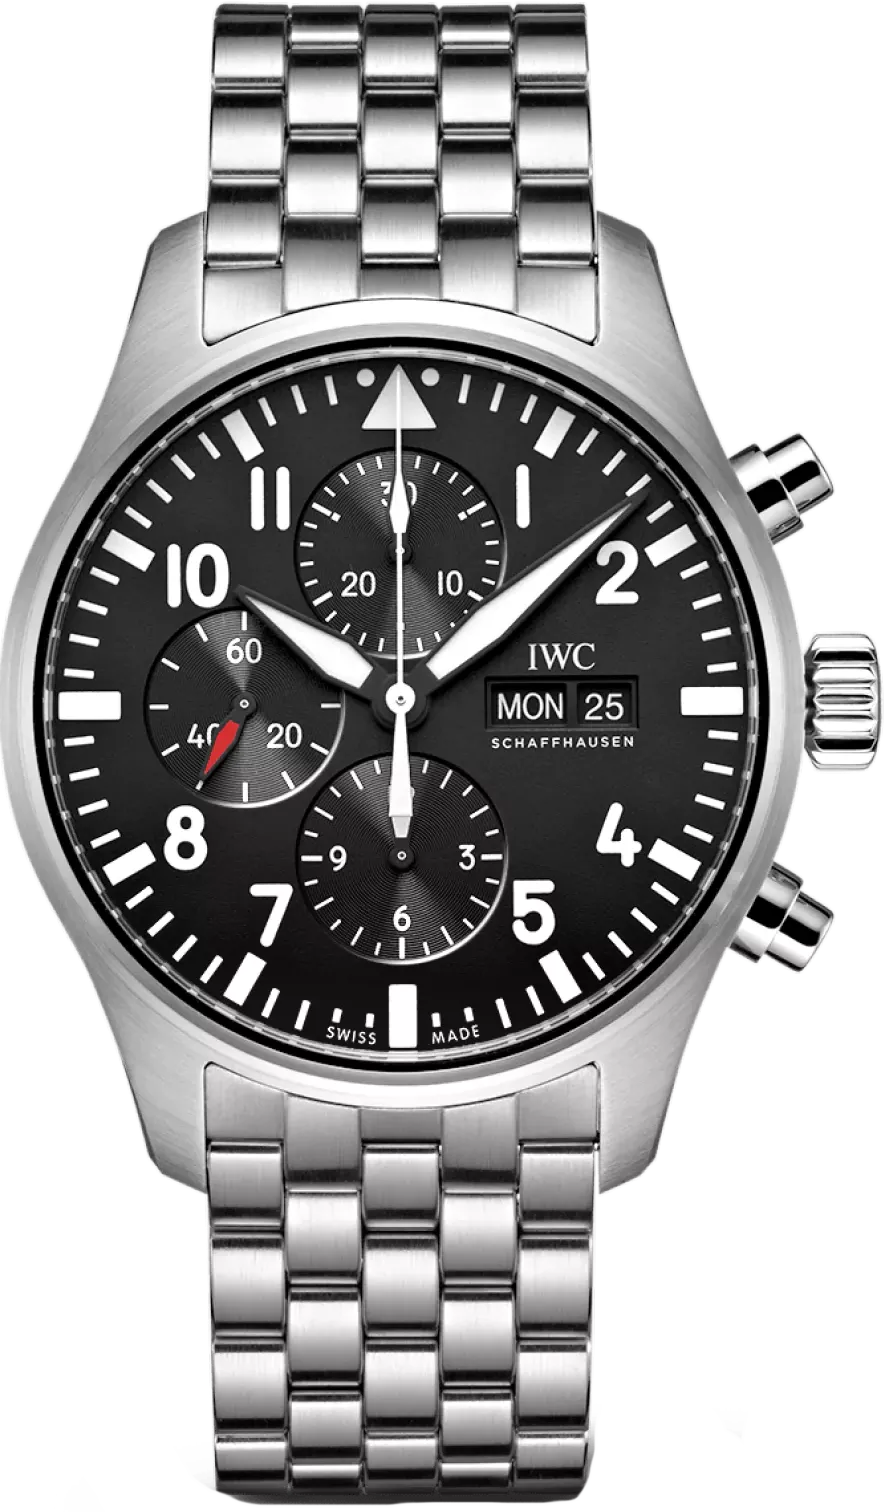 MSP: 100239 Iwc Pilot’s IW377710 Watch 43mm 169,200,000